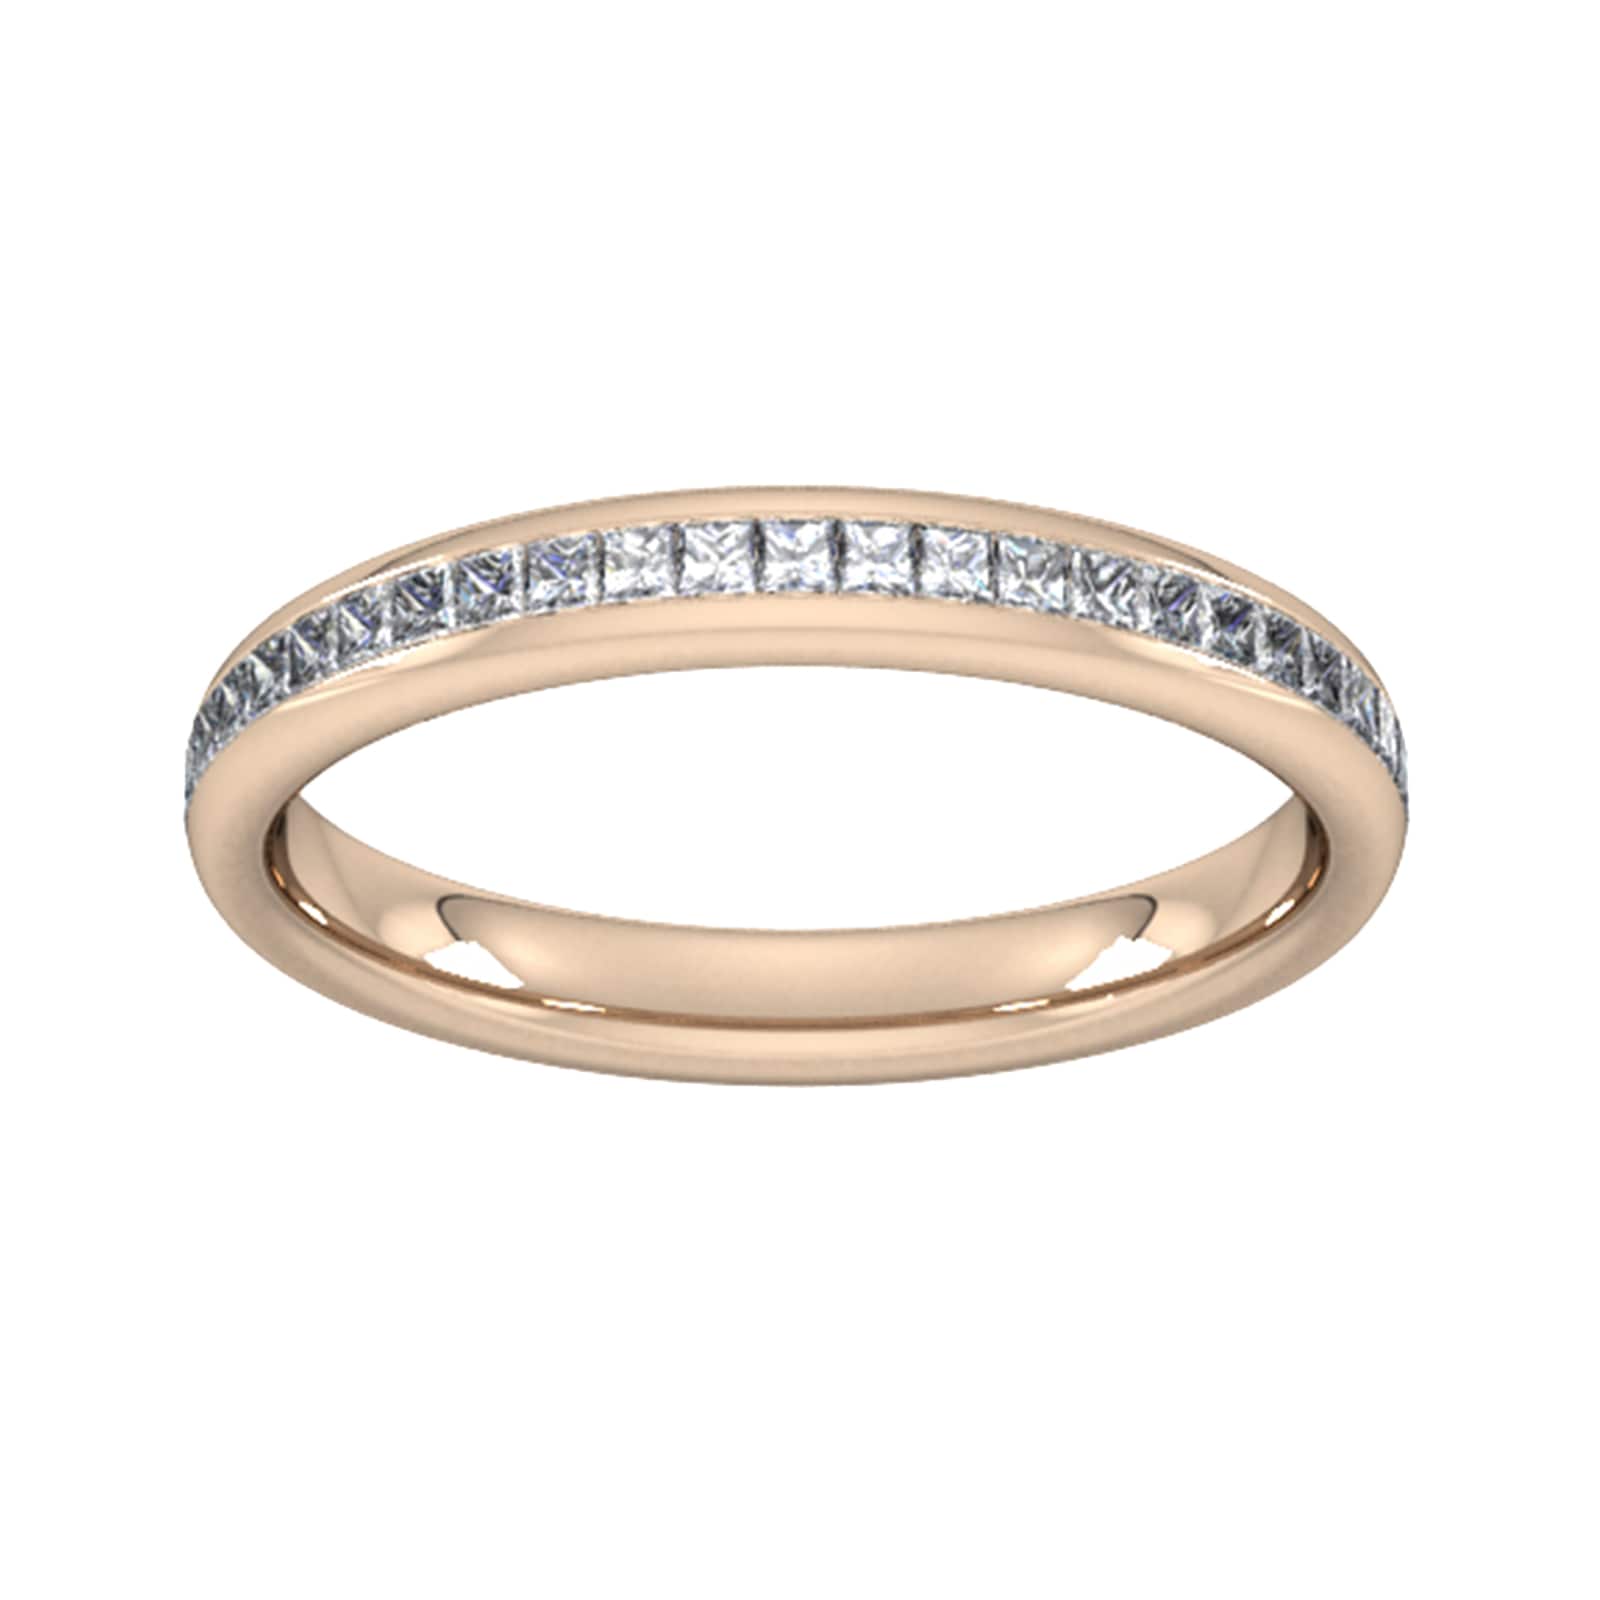 0.34 Carat Total Weight Princess Cut Channel Set Wedding Ring In 9 Carat Rose Gold - Ring Size O